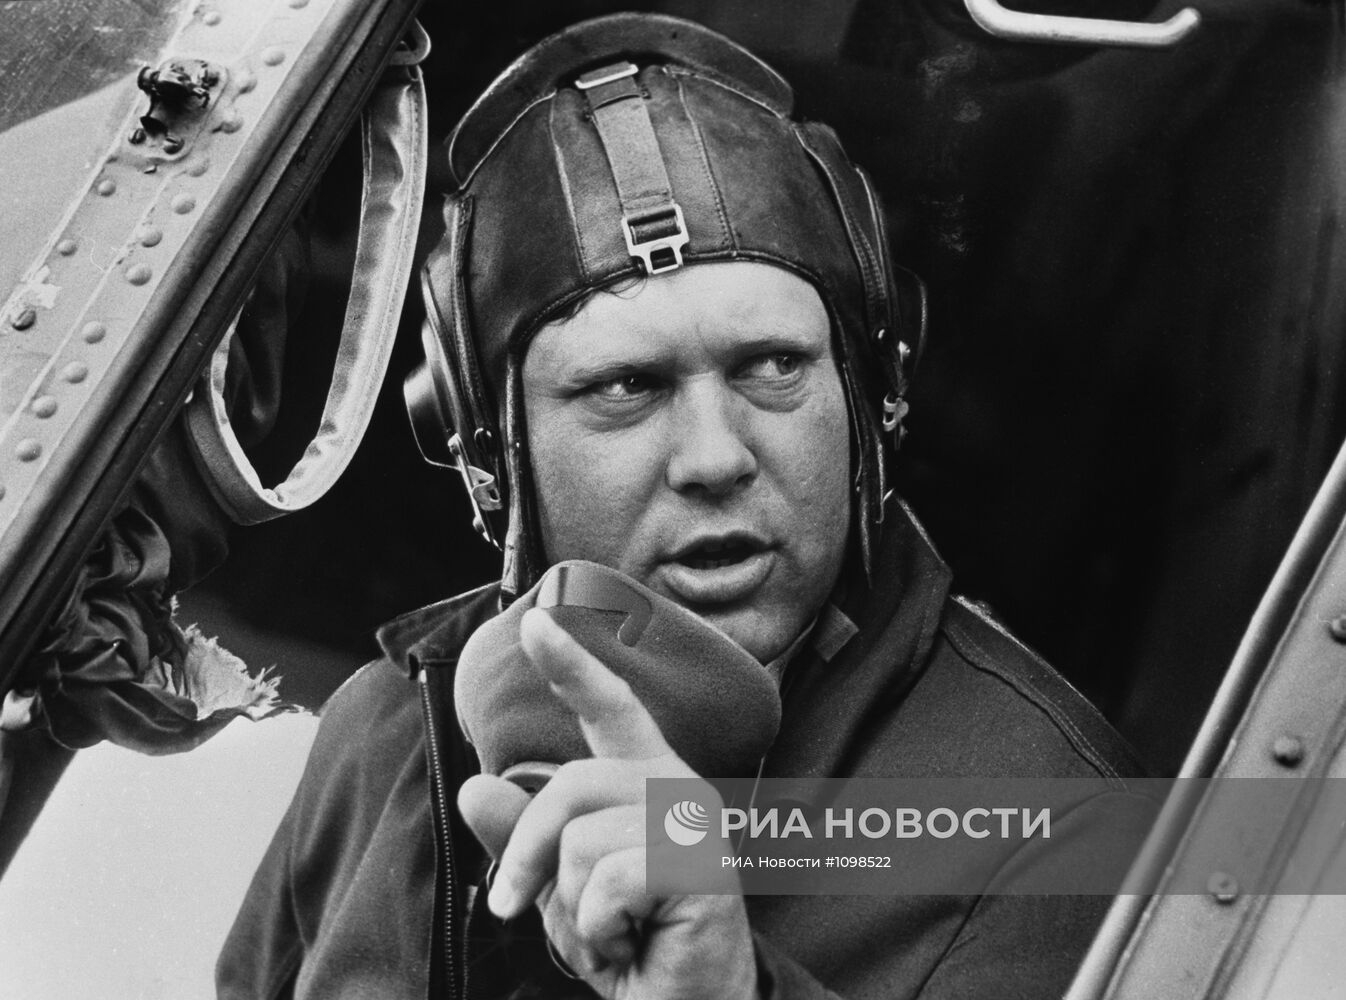 Командир вертолета Ми-8 капитан К.Е. Блин